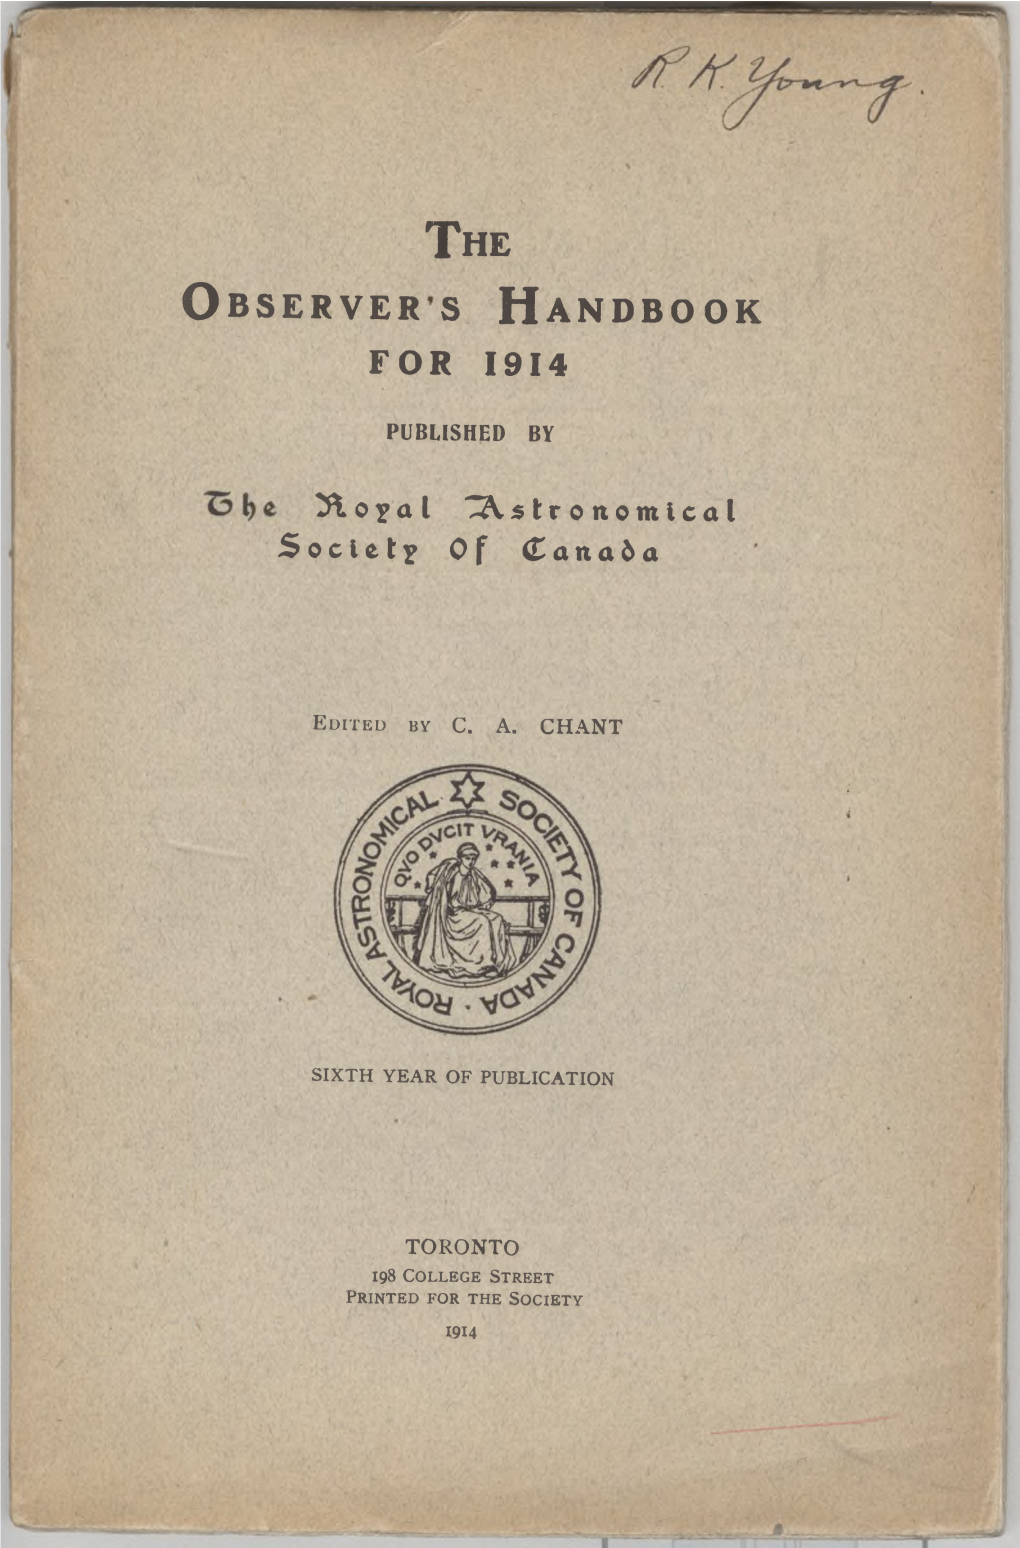 The Observer's Handbook for 1914